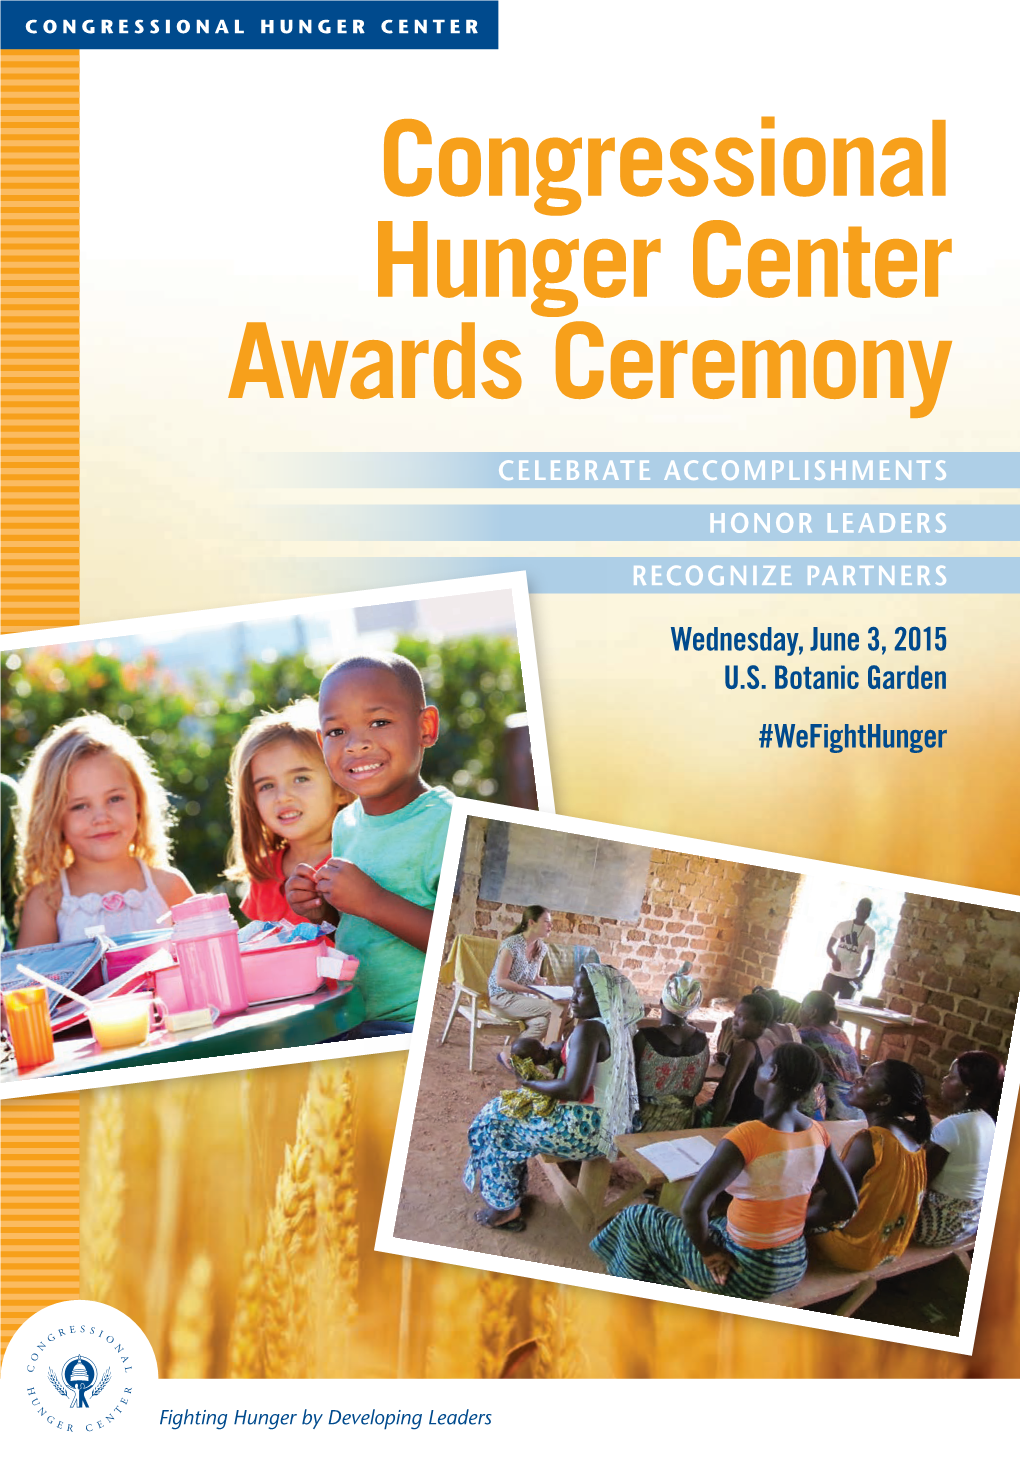 Congressional Hunger Center Awards Ceremony